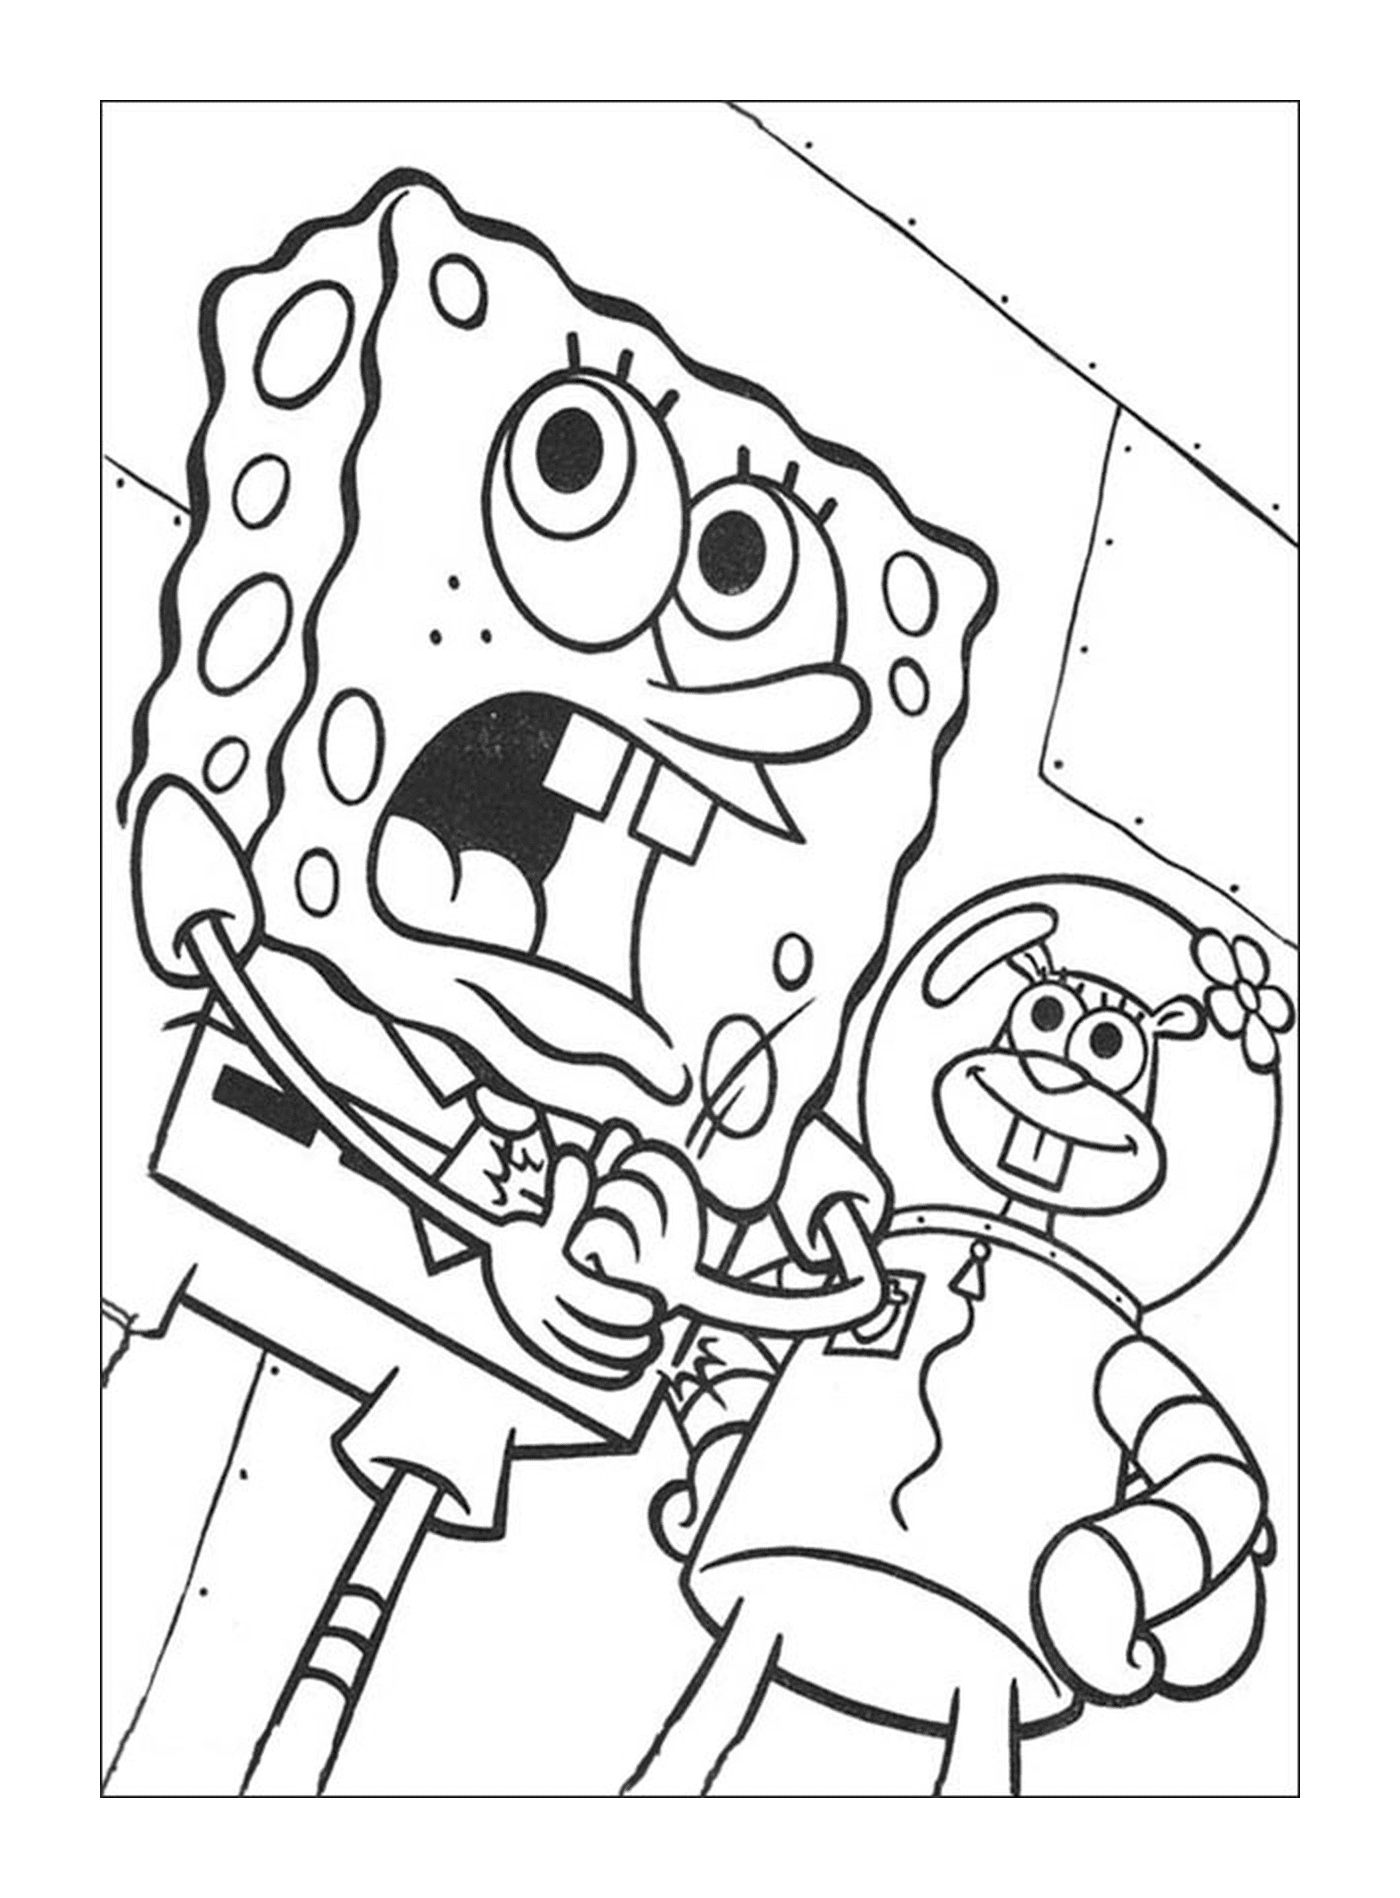  Spongebob e Carlo Tentacoli 